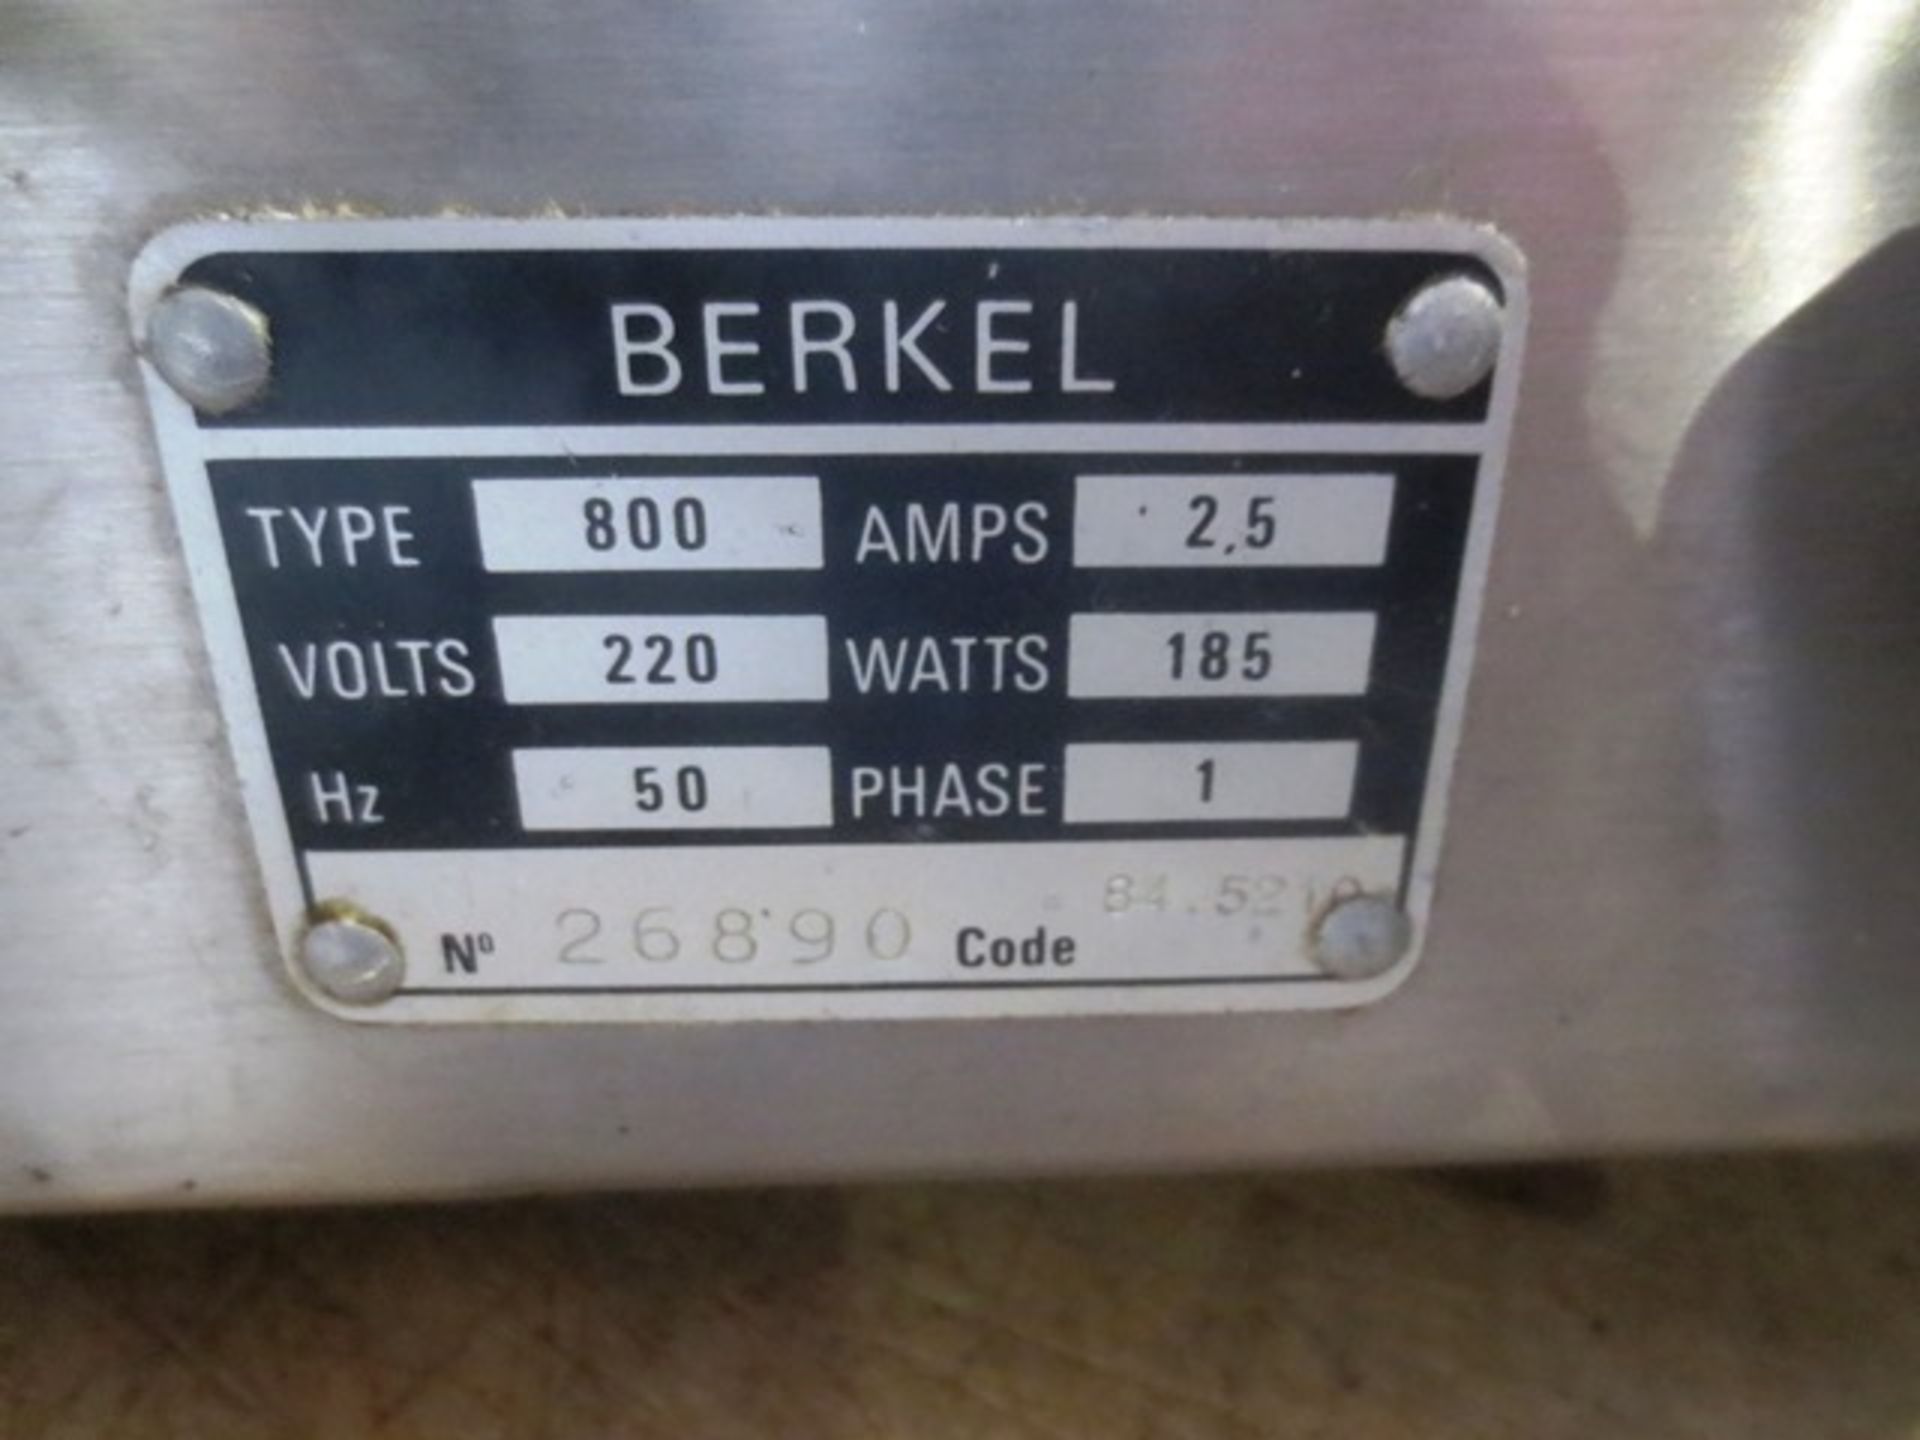 Berkel stainless steel bench top slicer, model 800, serial no: 26890, 240v - Image 4 of 4